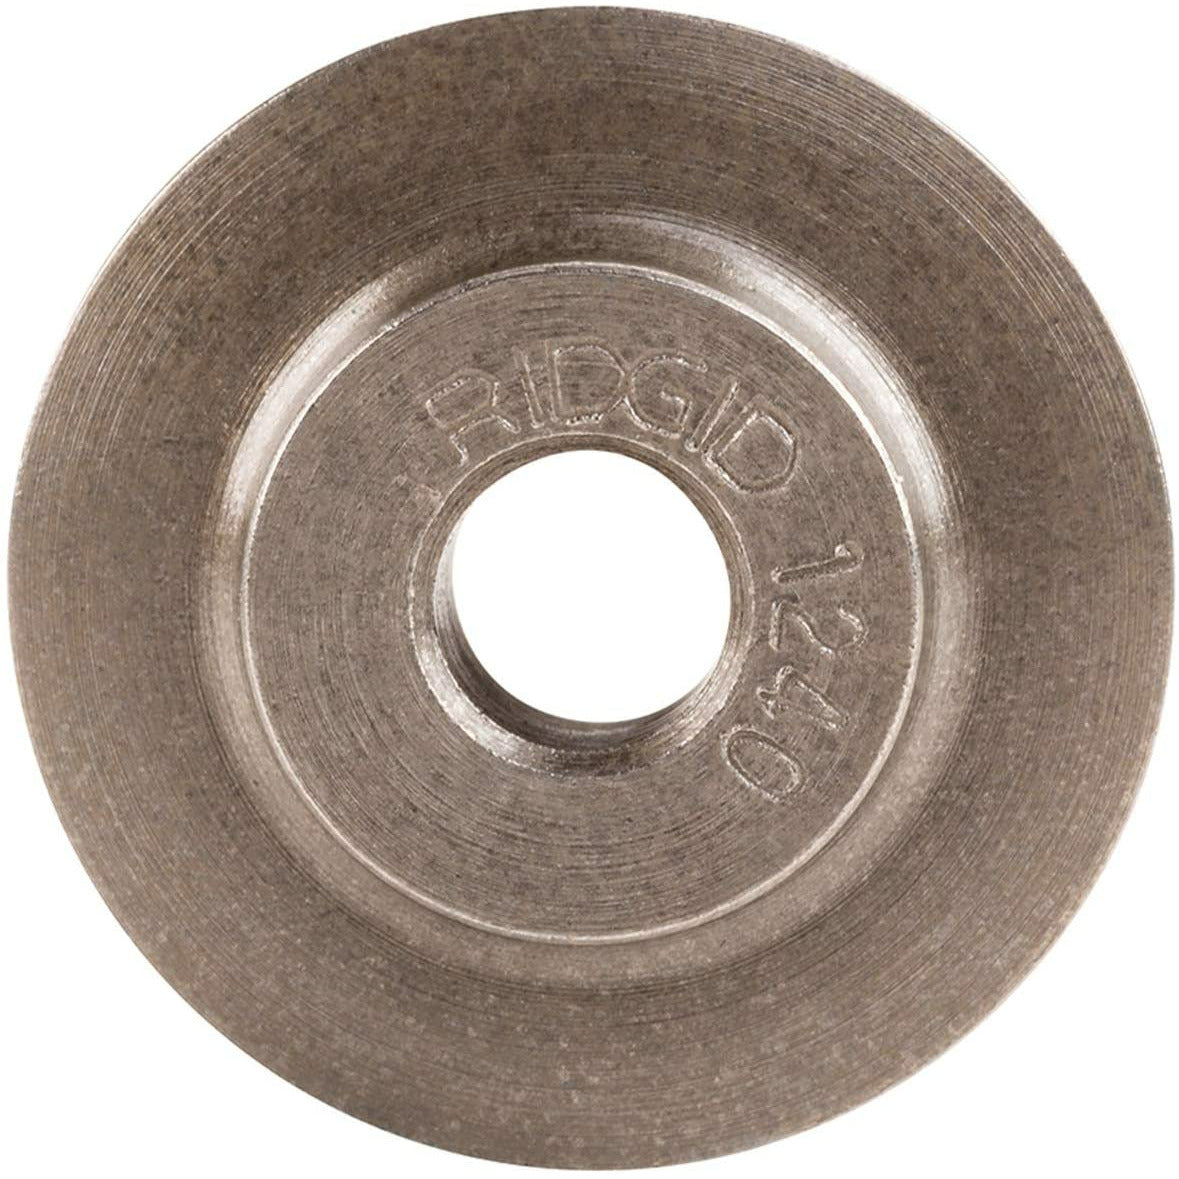 Ridgid 33165 Pipe Cutter Replacement Wheel